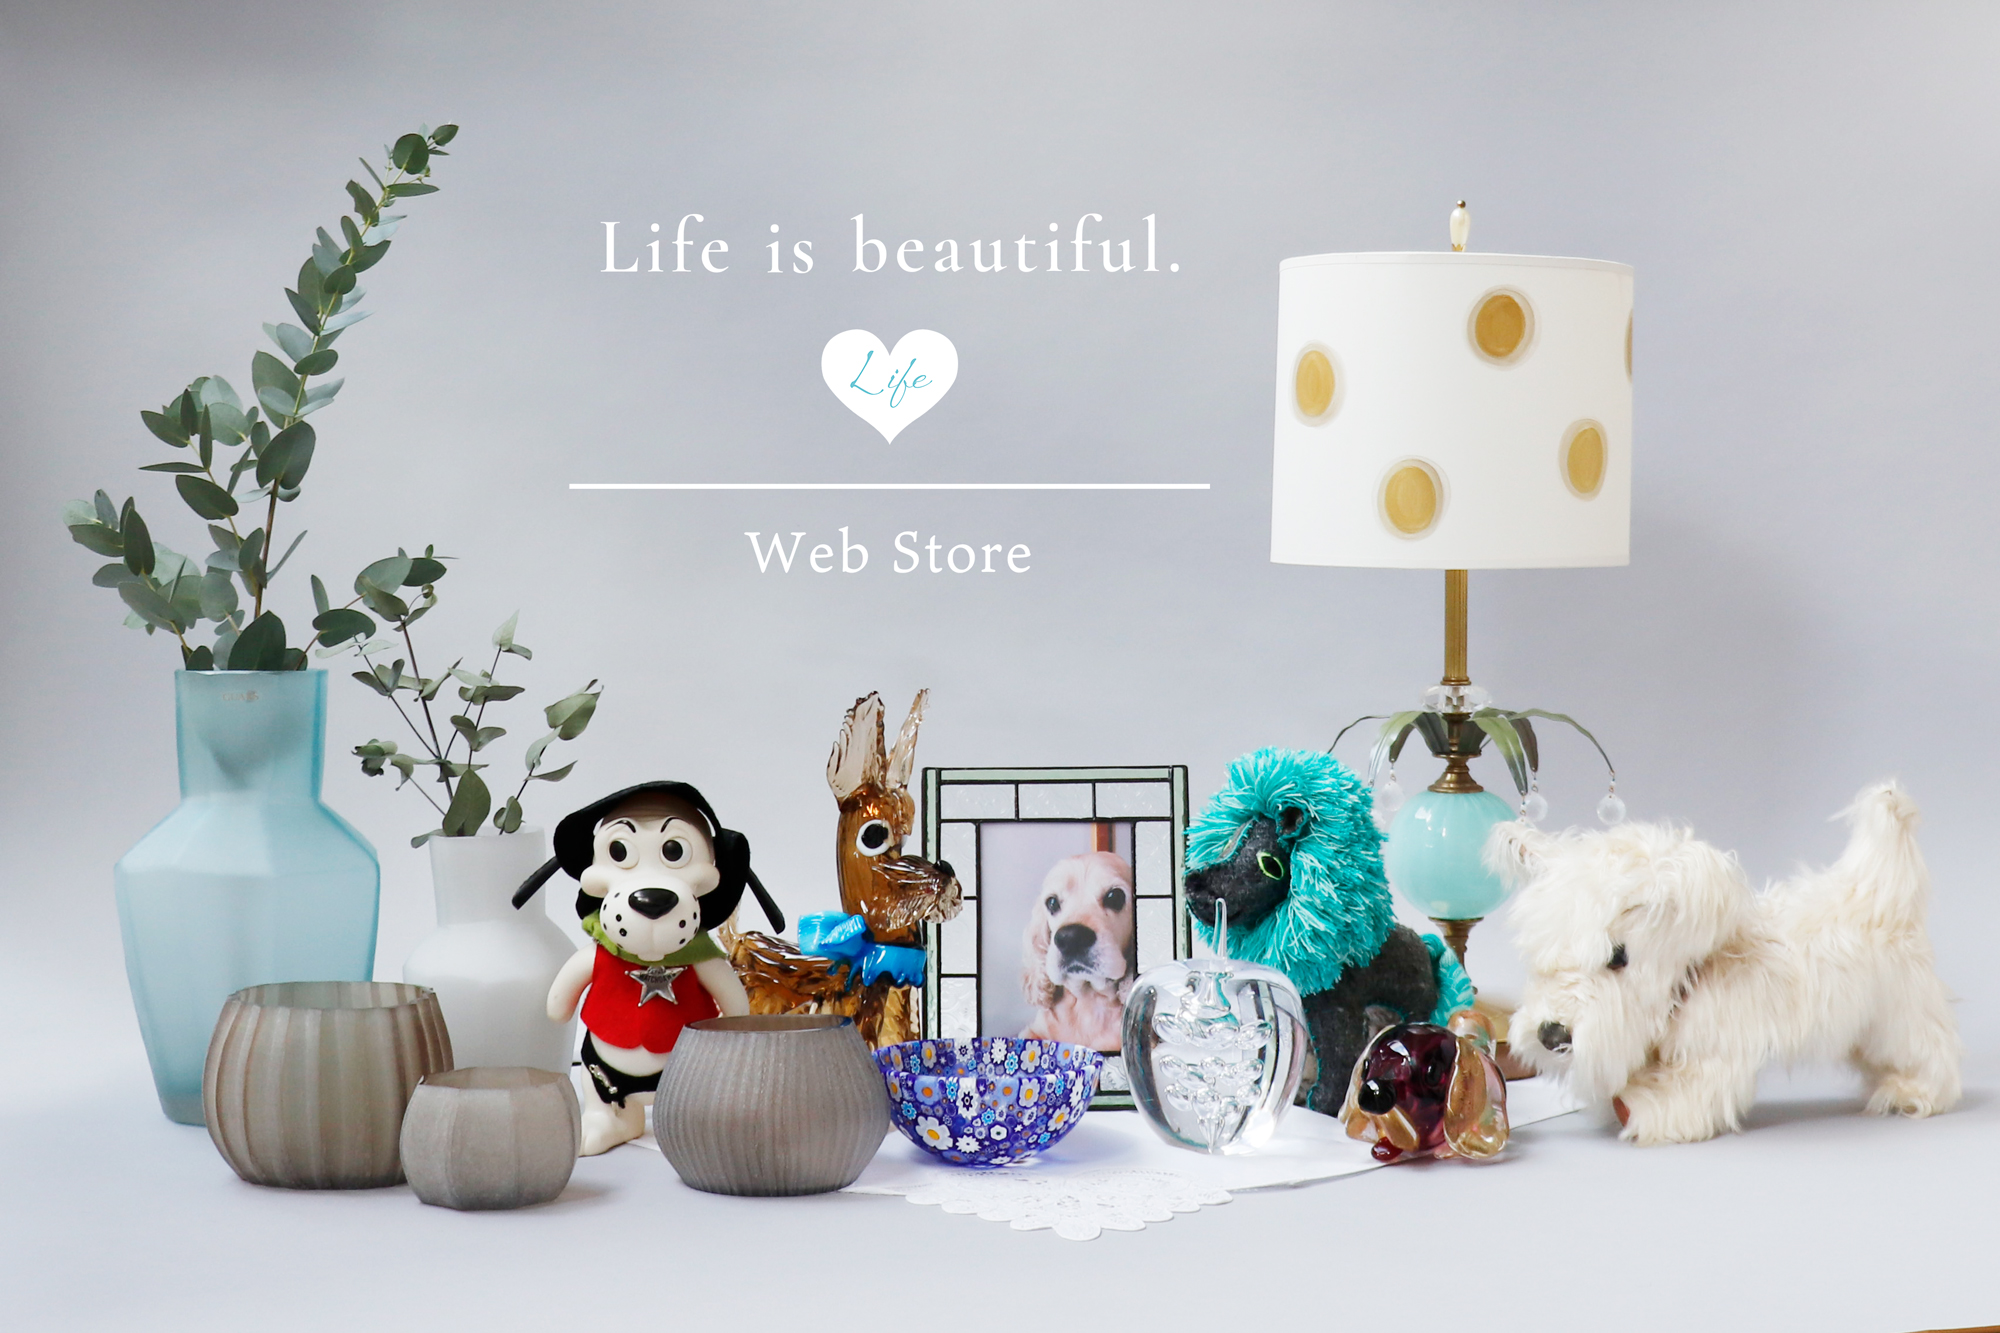 Web store : Life is beautiful.